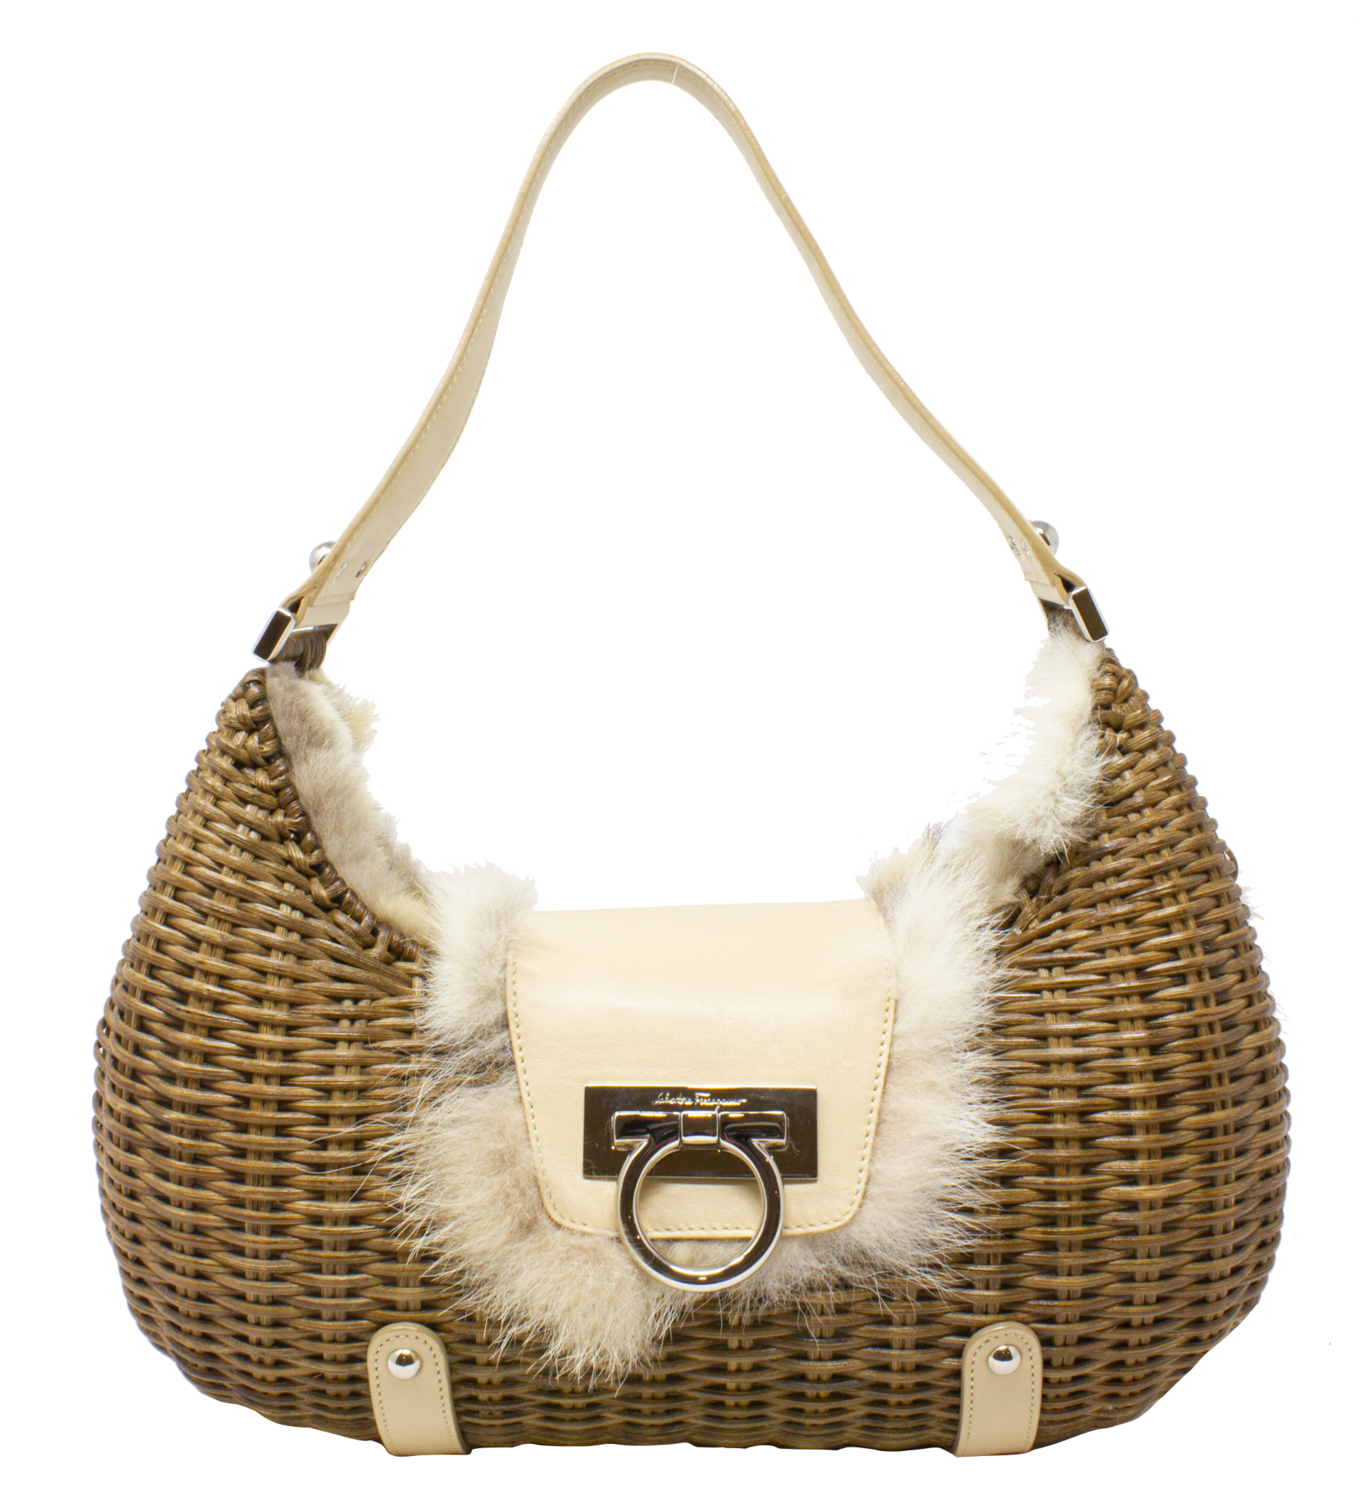 Salvatore Ferragamo Basket Weave Fur Bag